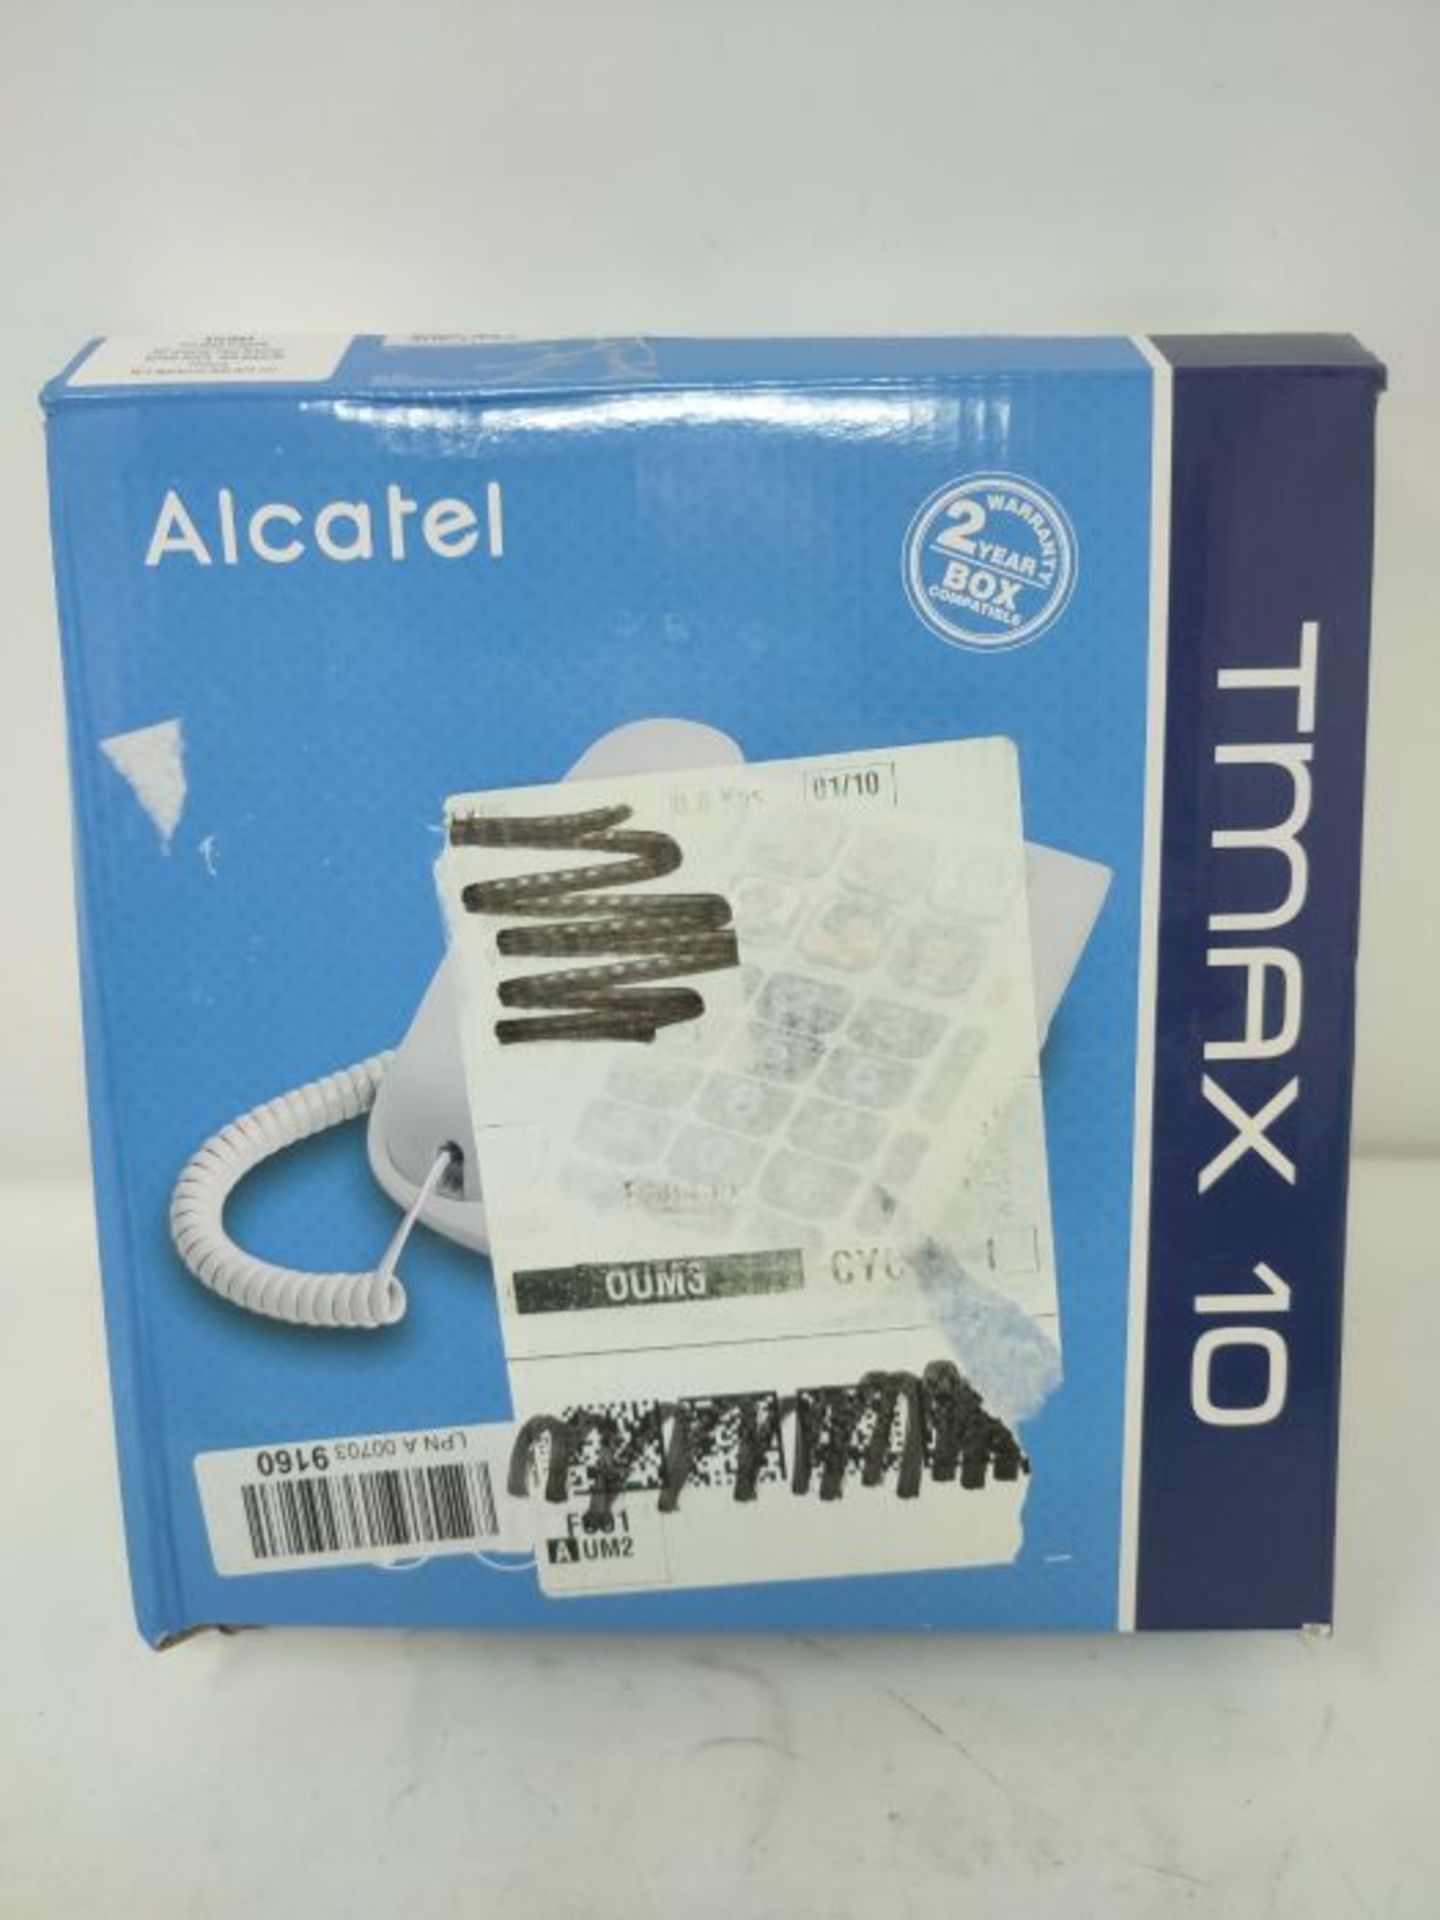 Alcatel Max 10 Corded Phone for Seniors White. - Image 2 of 3